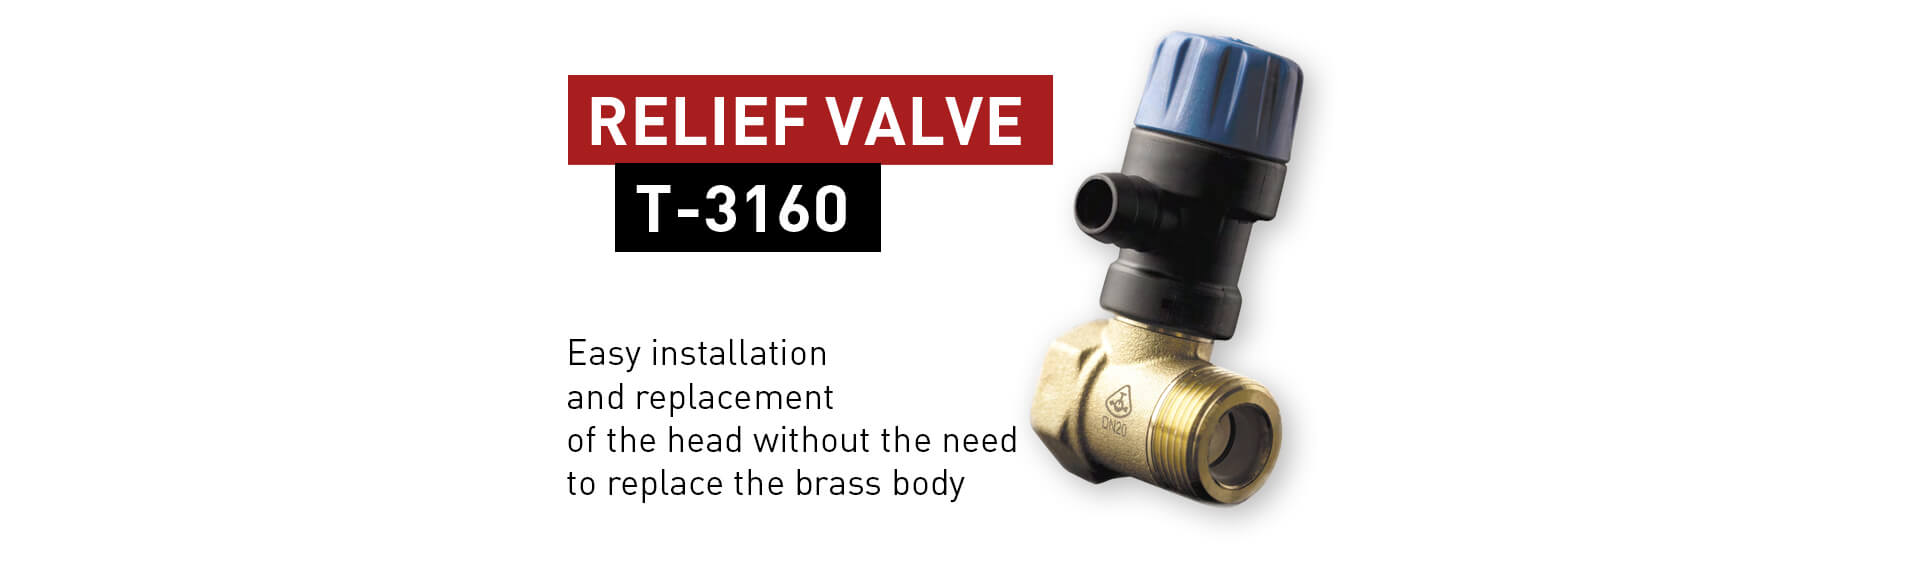 Relief valve T-3160